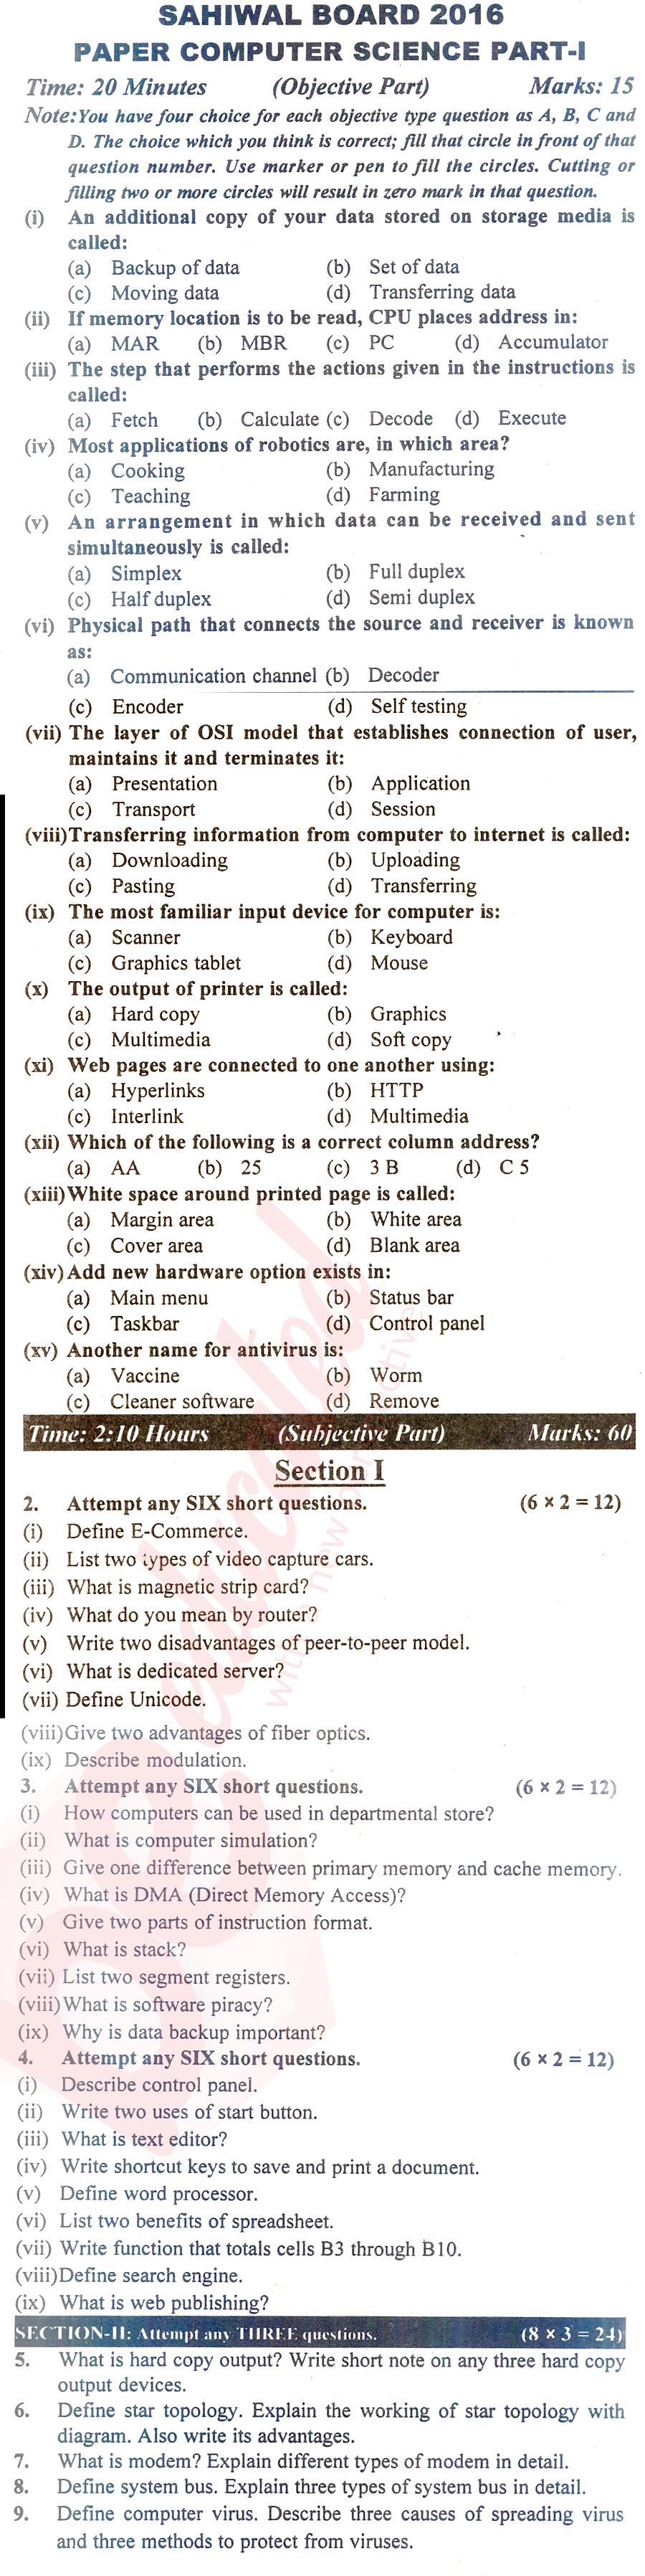 Computer Science ICS Part 1 Past Paper Group 1 BISE Sahiwal 2016